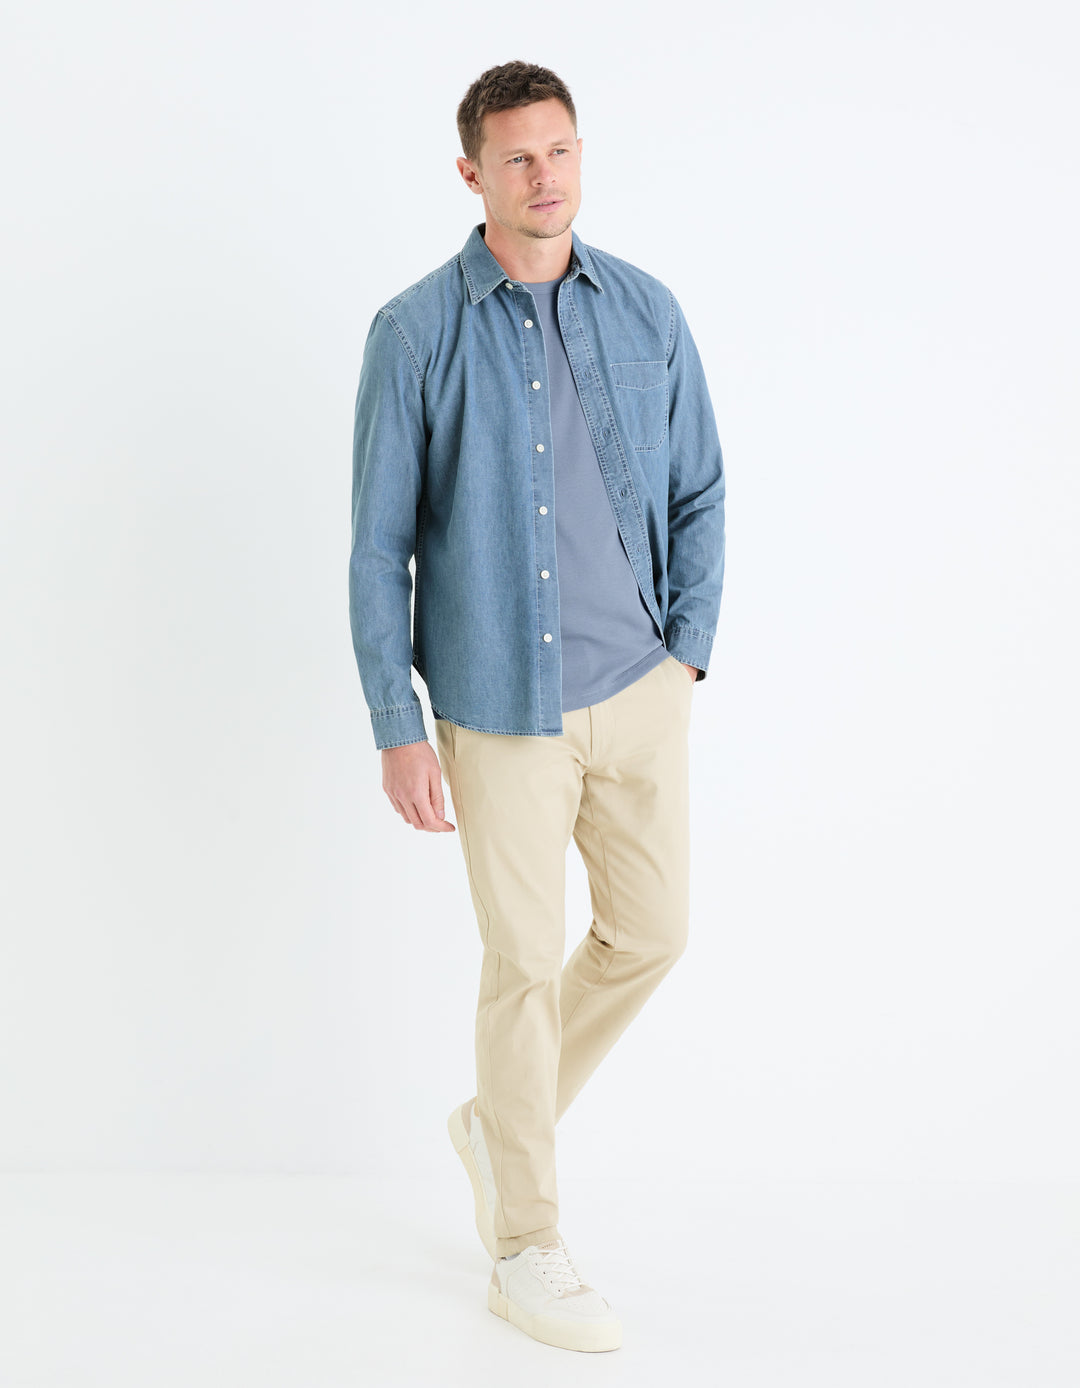 Regular French collar shirt 100% cotton